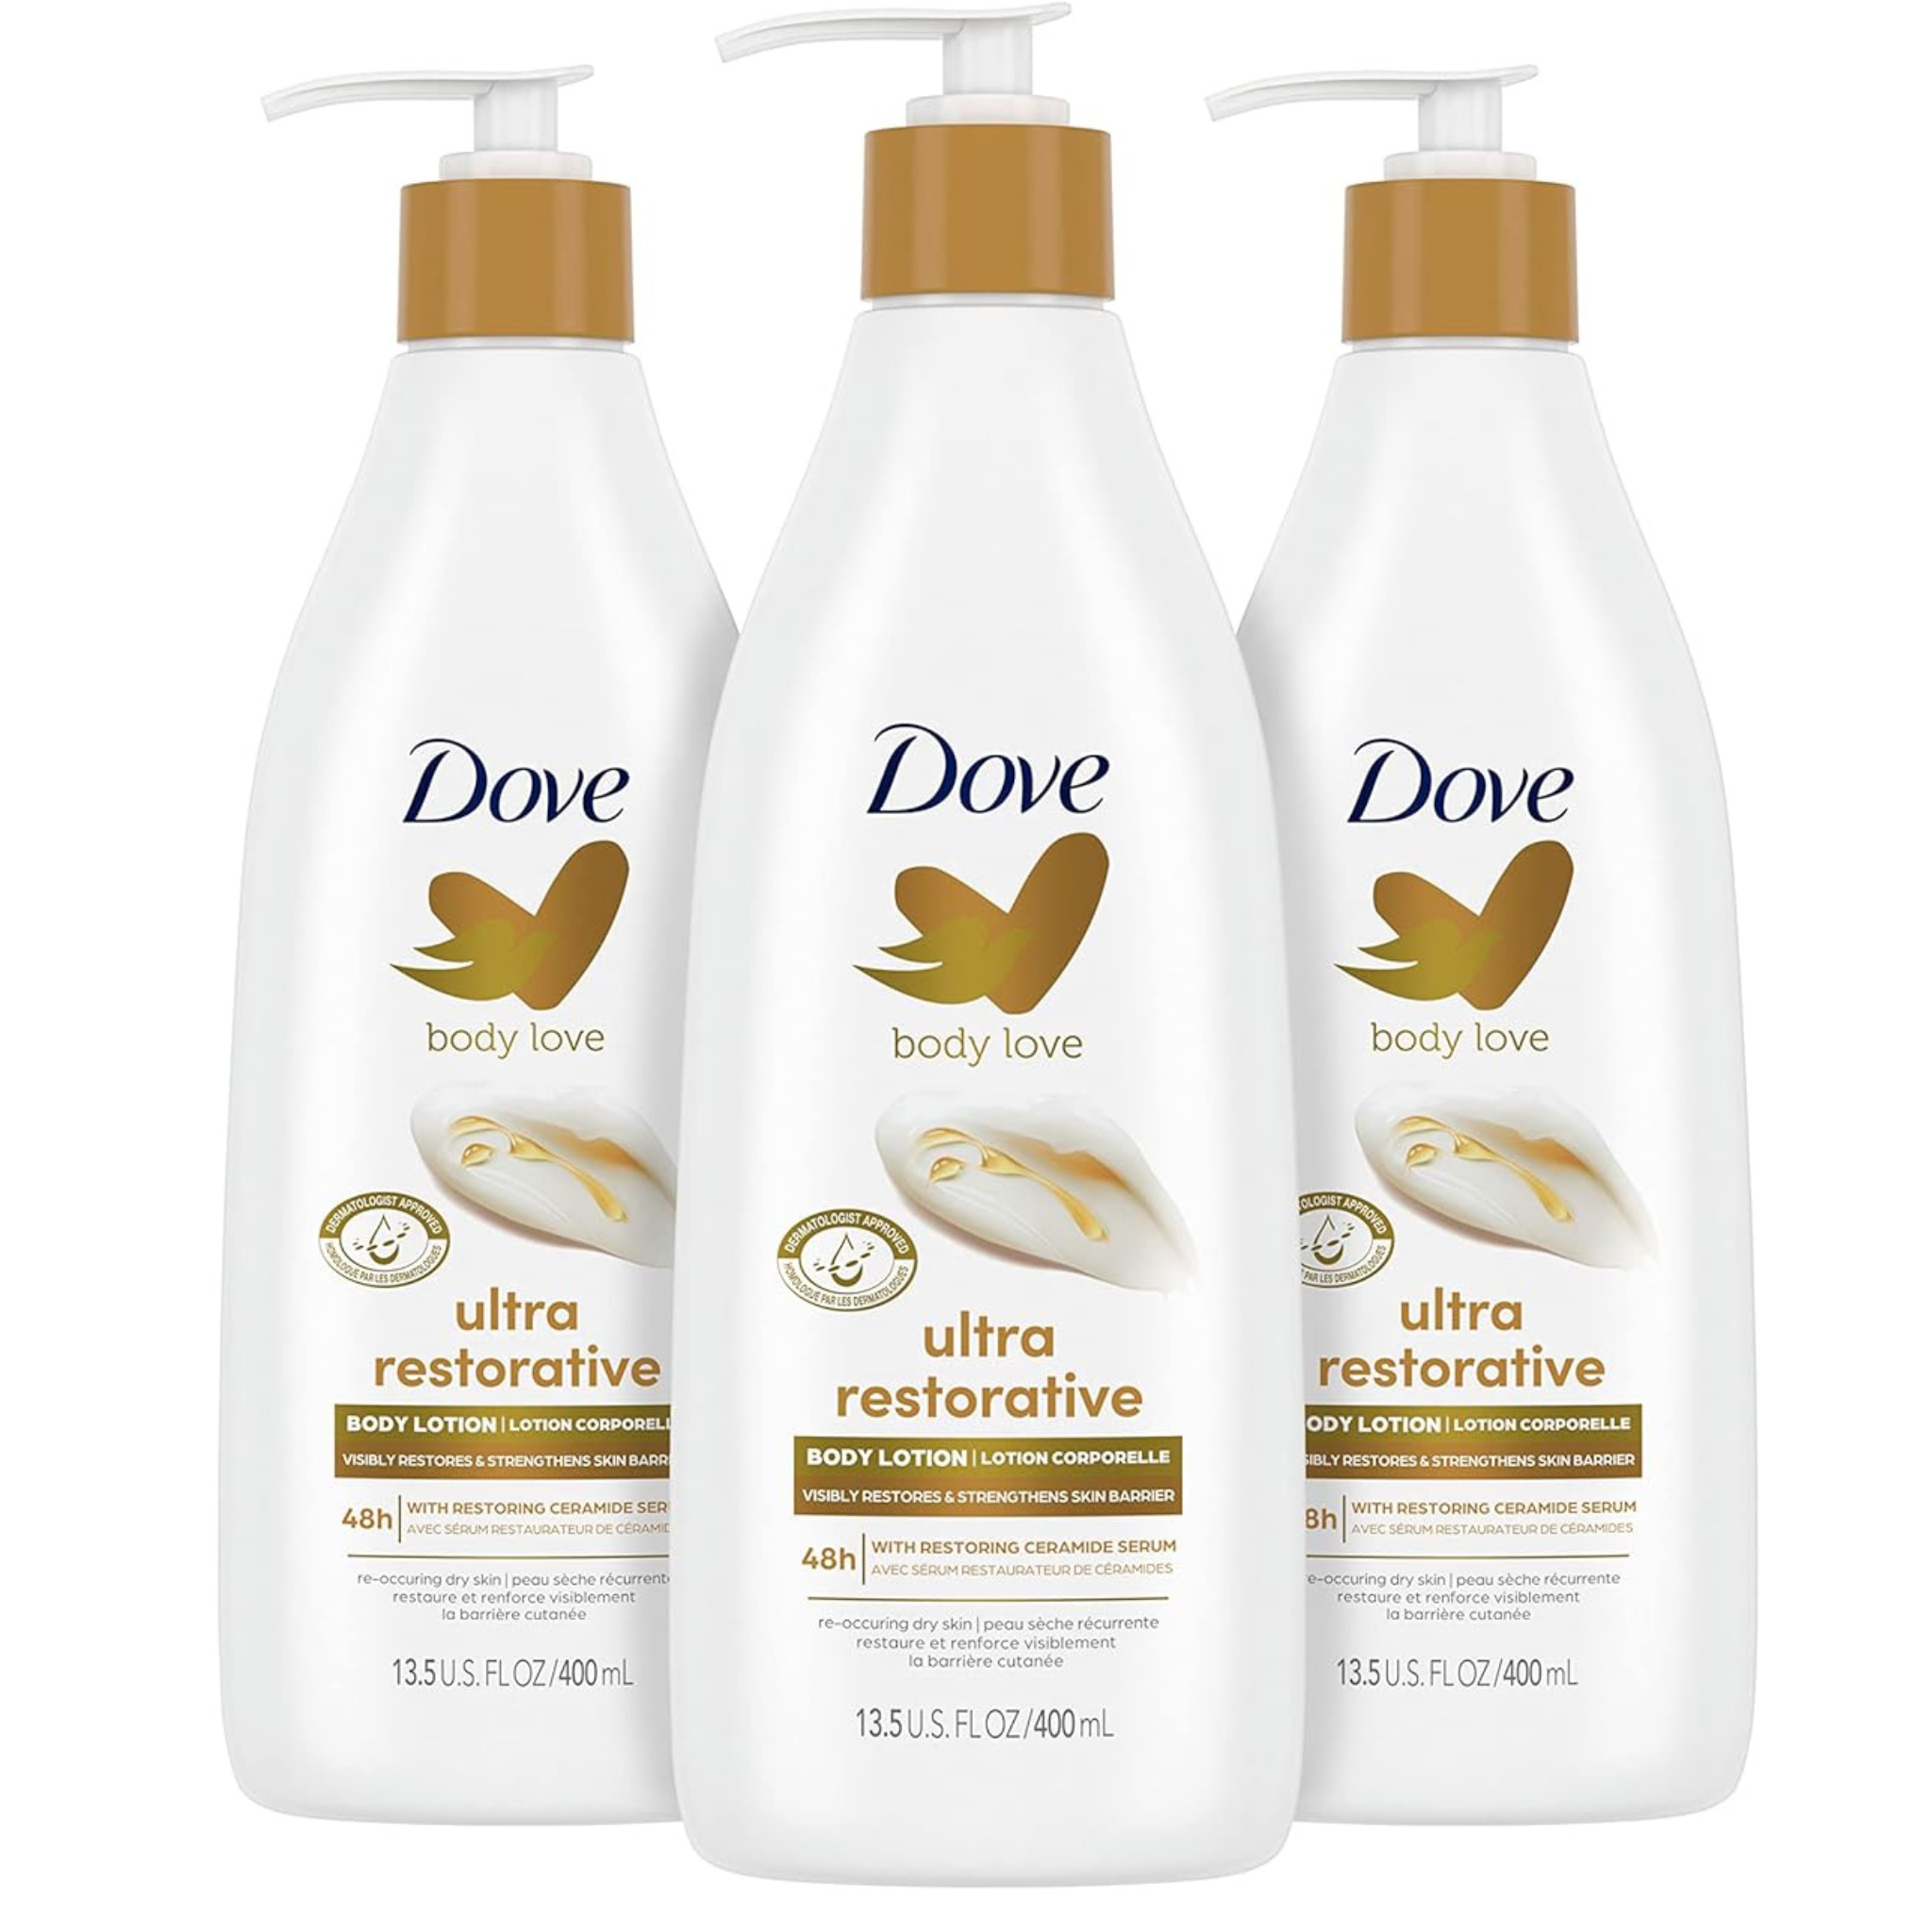 3 Bottles Of Dove Body Love Body Lotion Restoring Care Pack